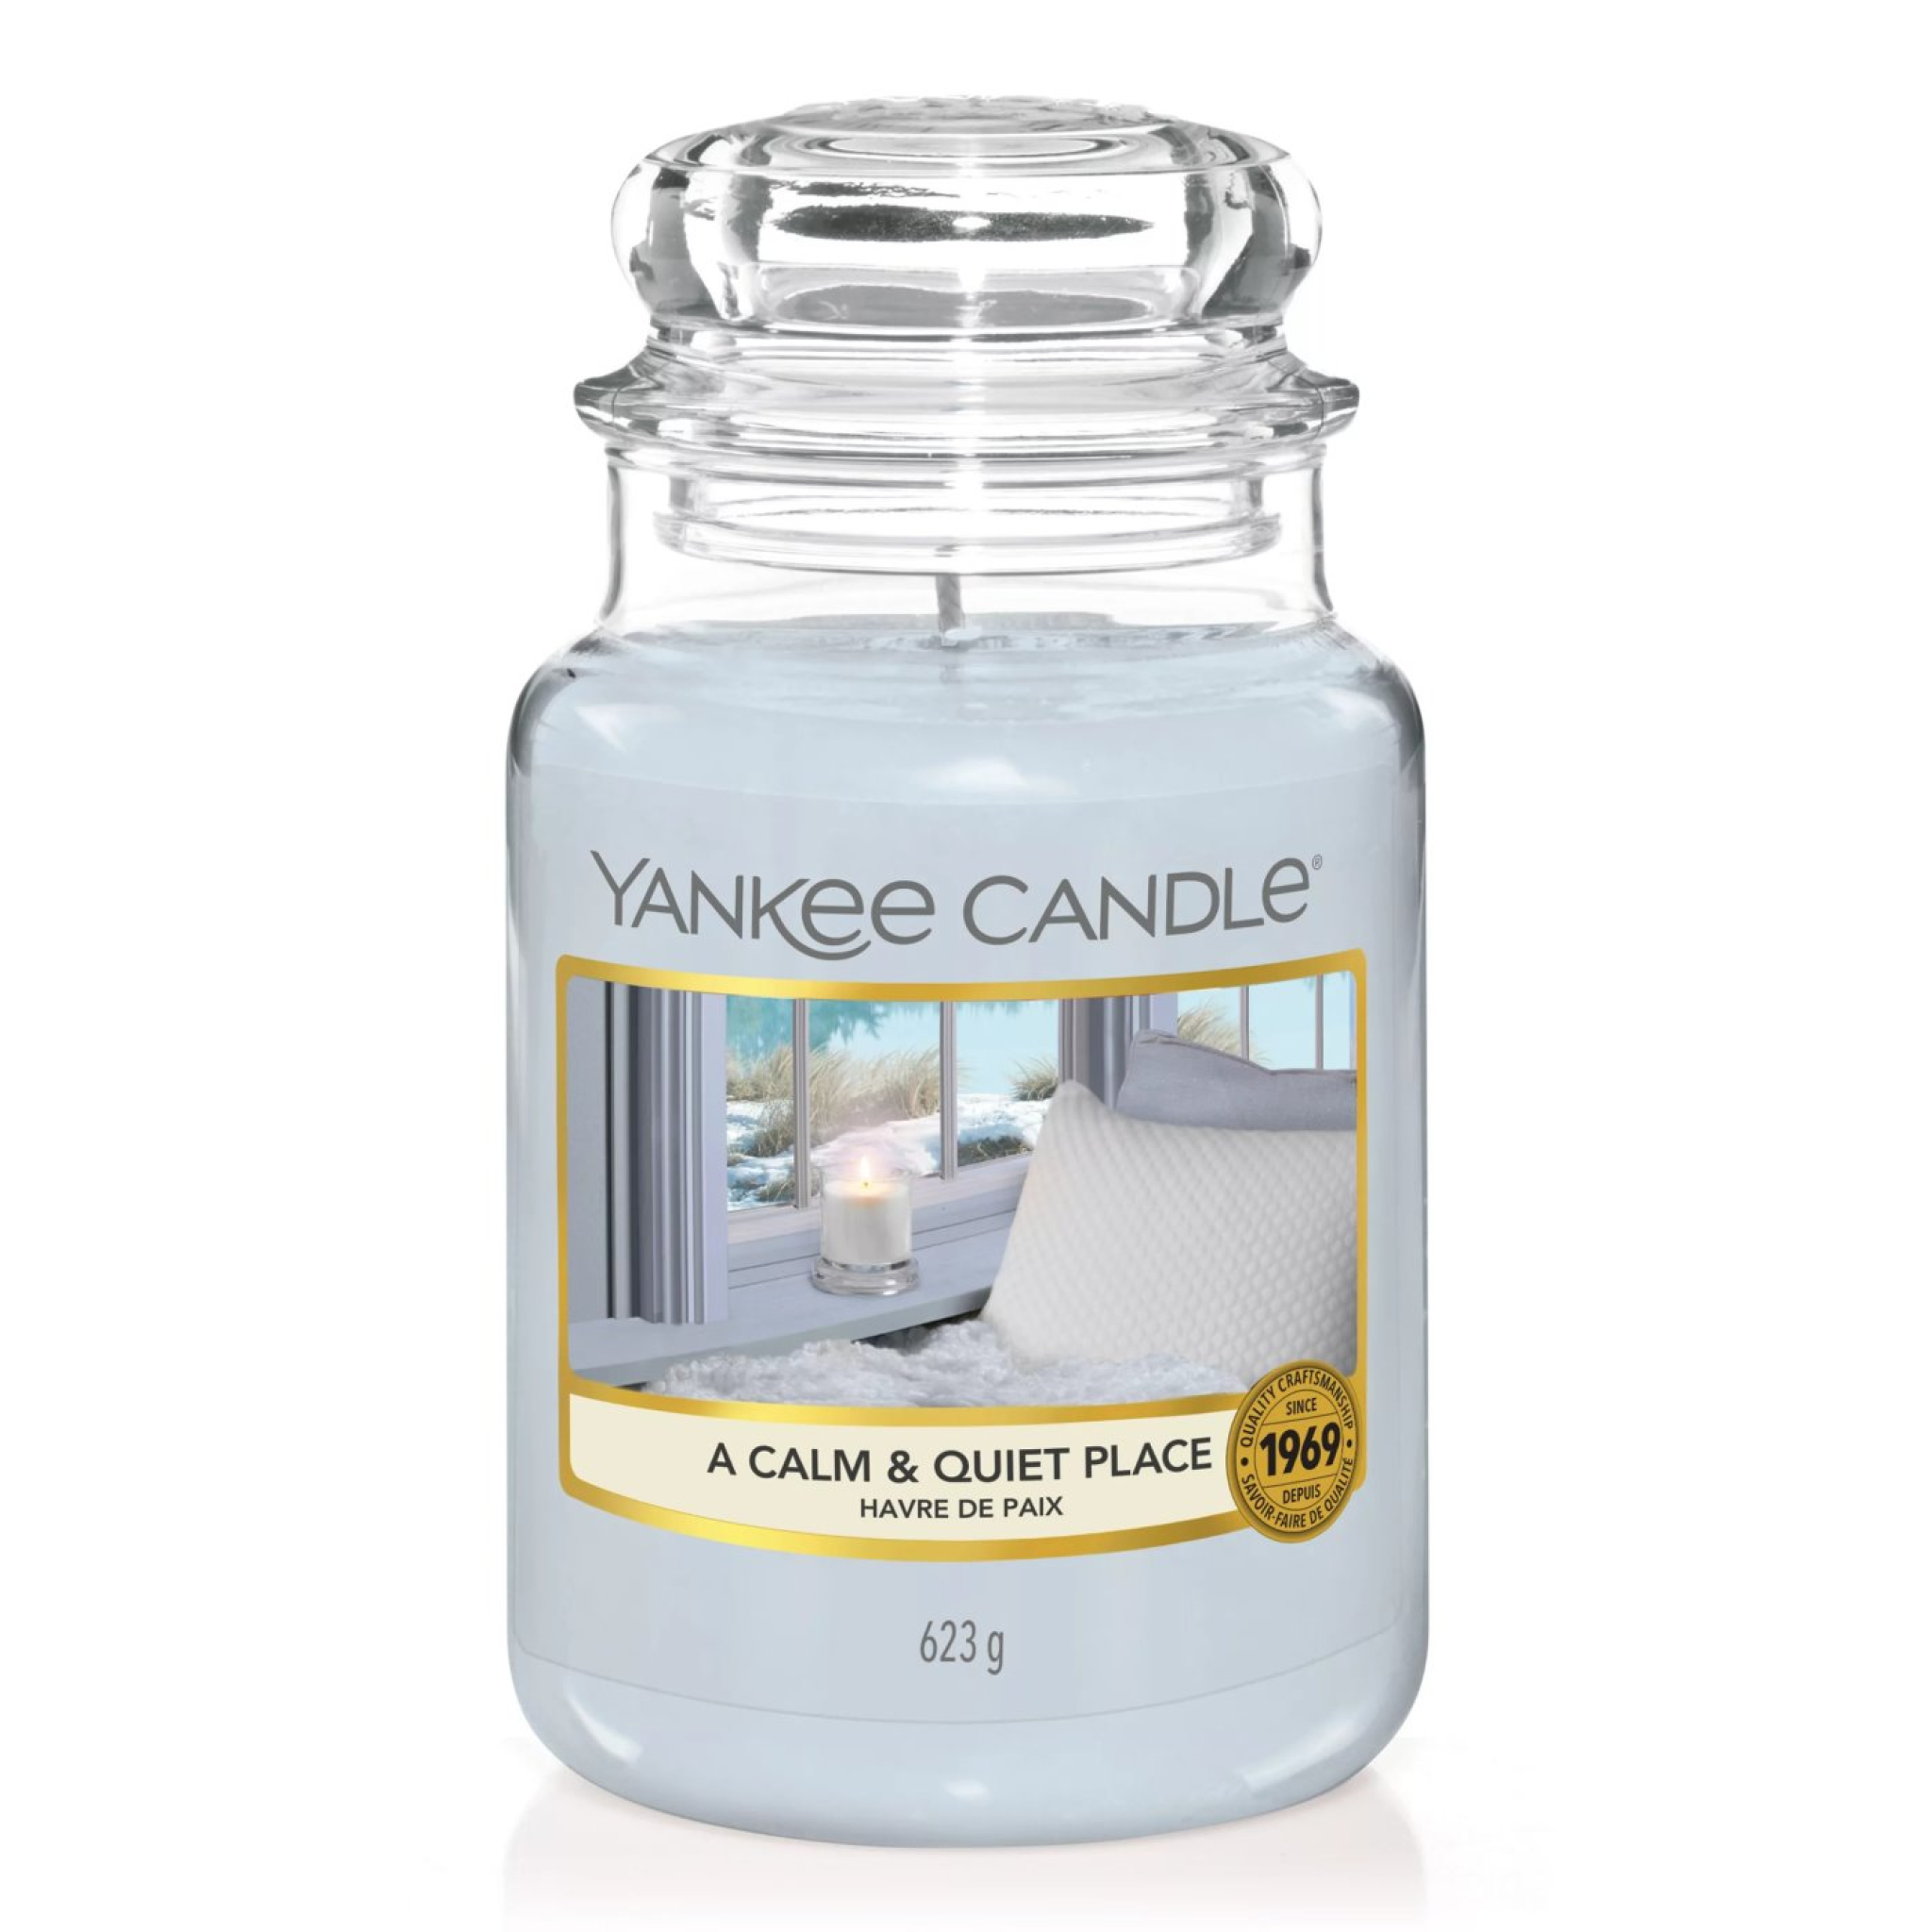 Yankee Candle Baby Powder Duftkerze Großes Glas 623 g